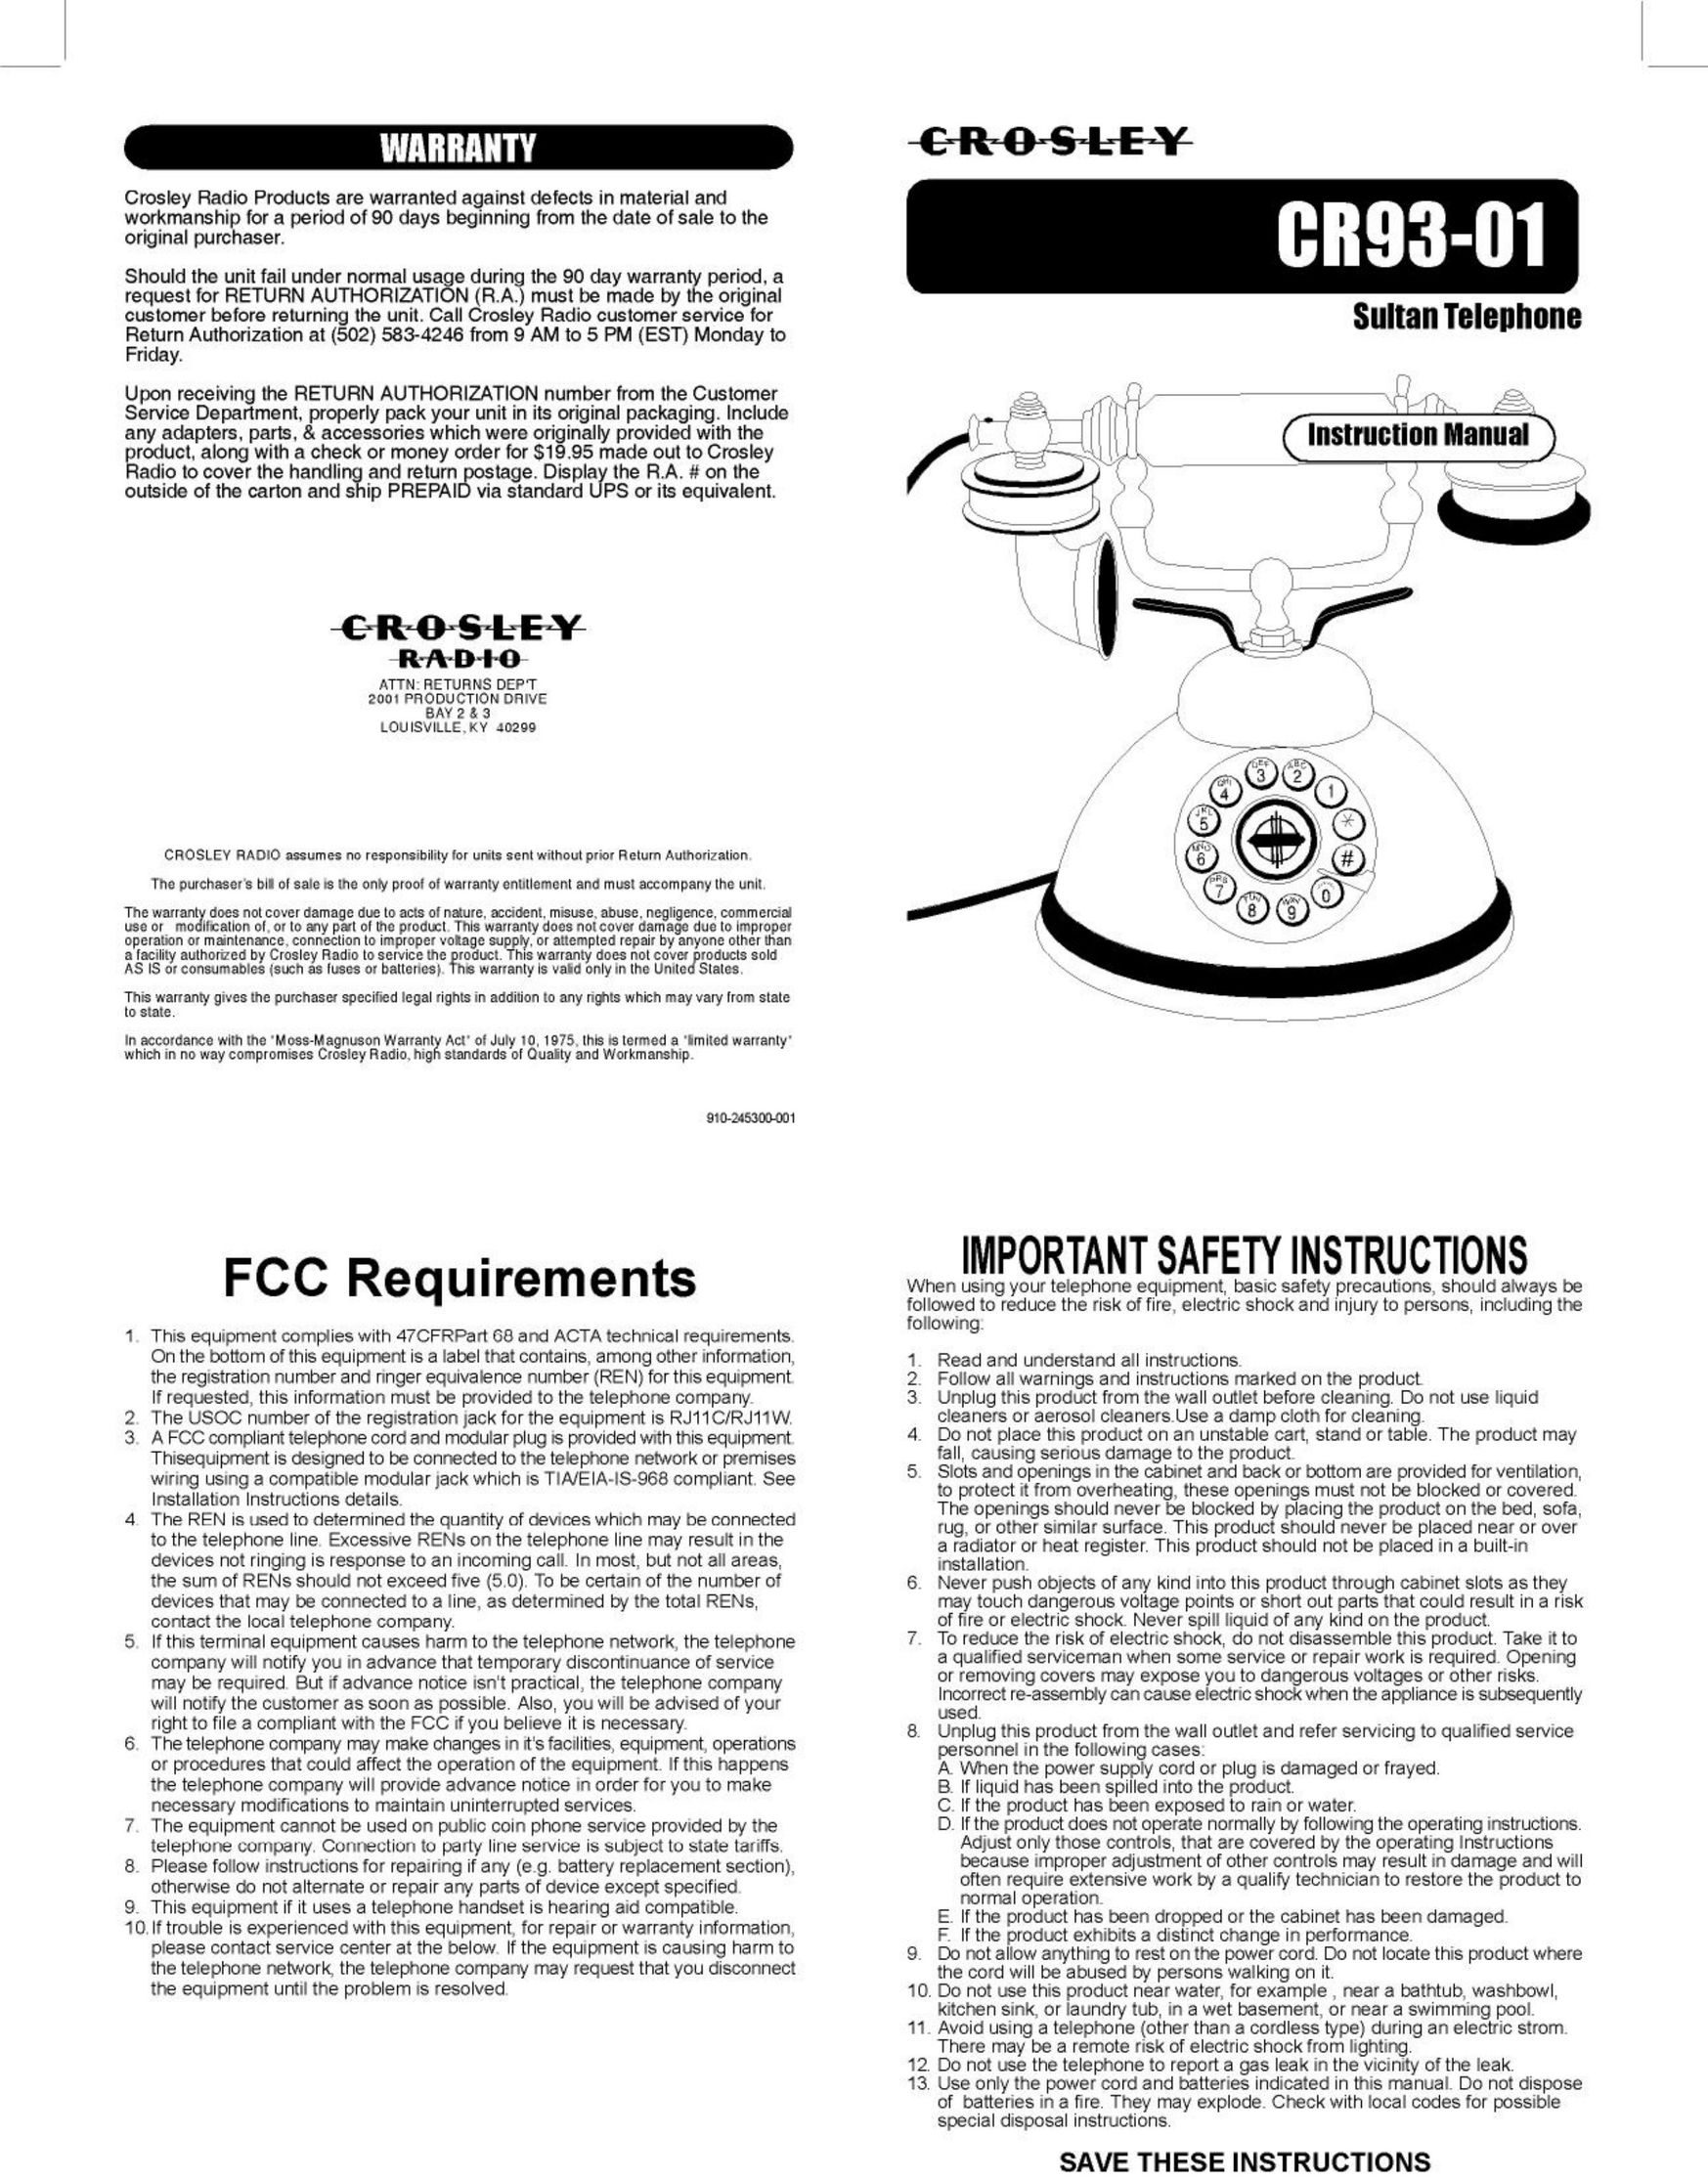 Crosley Radio CR93 Cordless Telephone User Manual